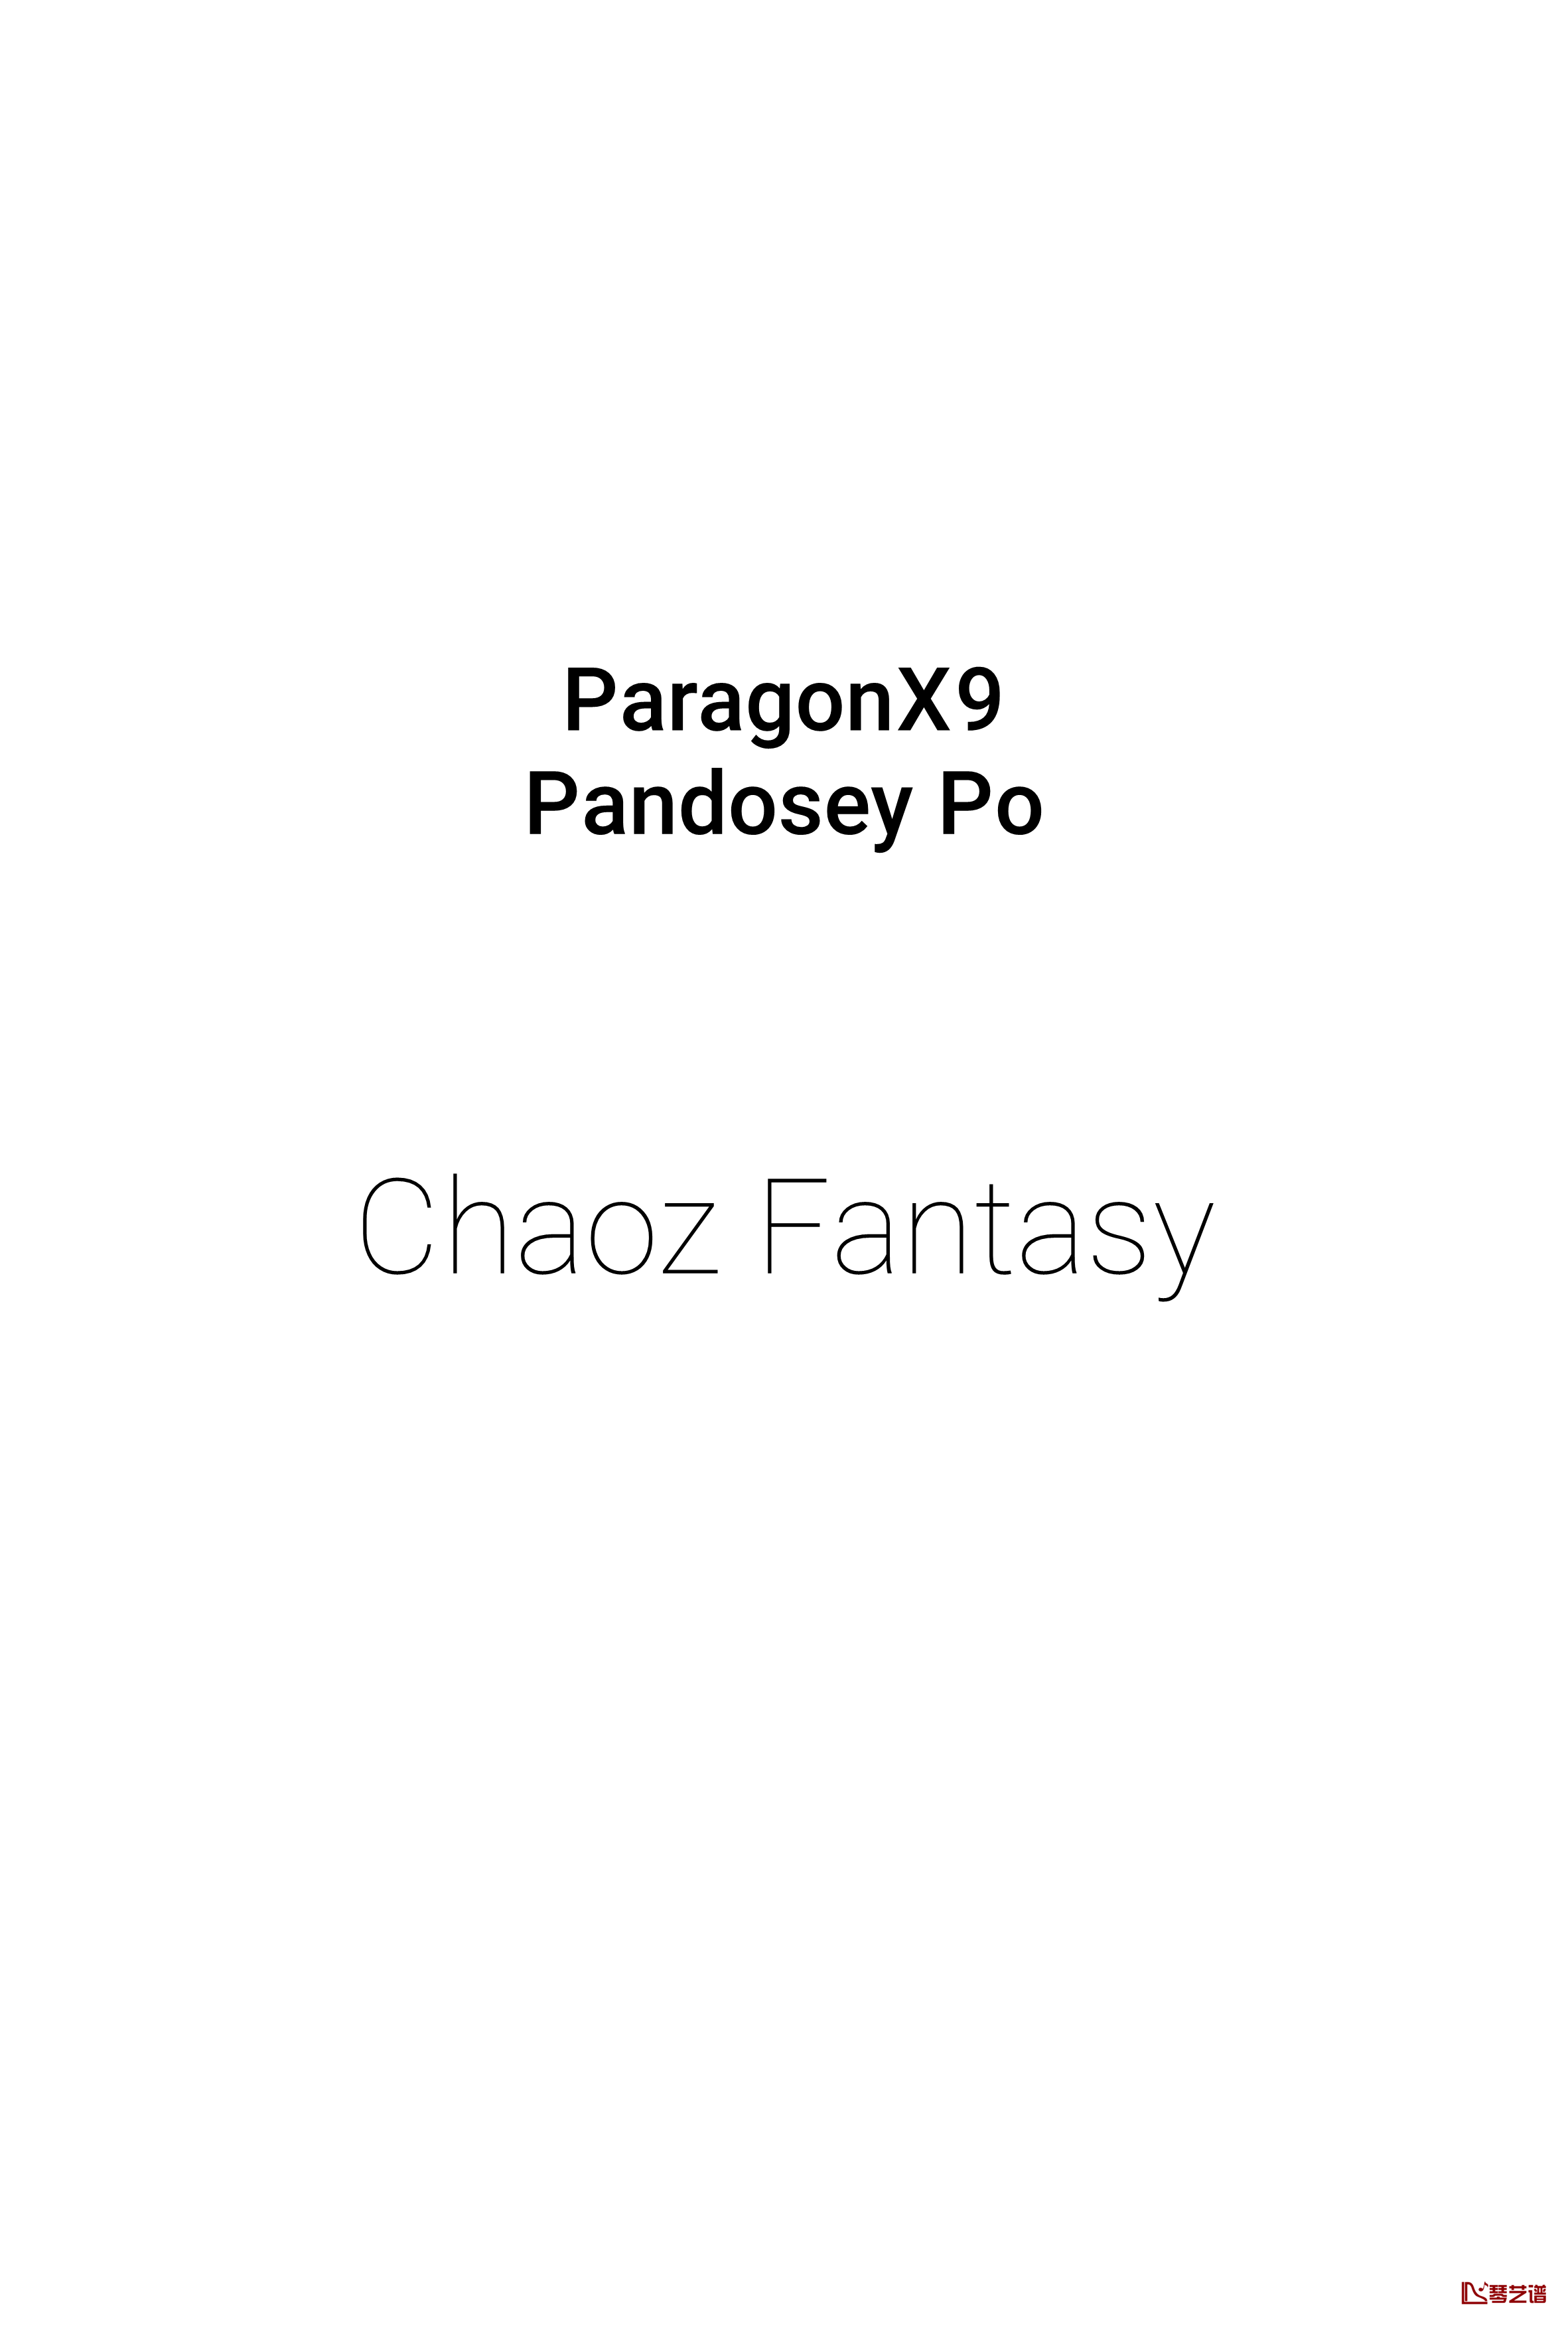 Chaoz Fantasy钢琴谱-ParagonX91